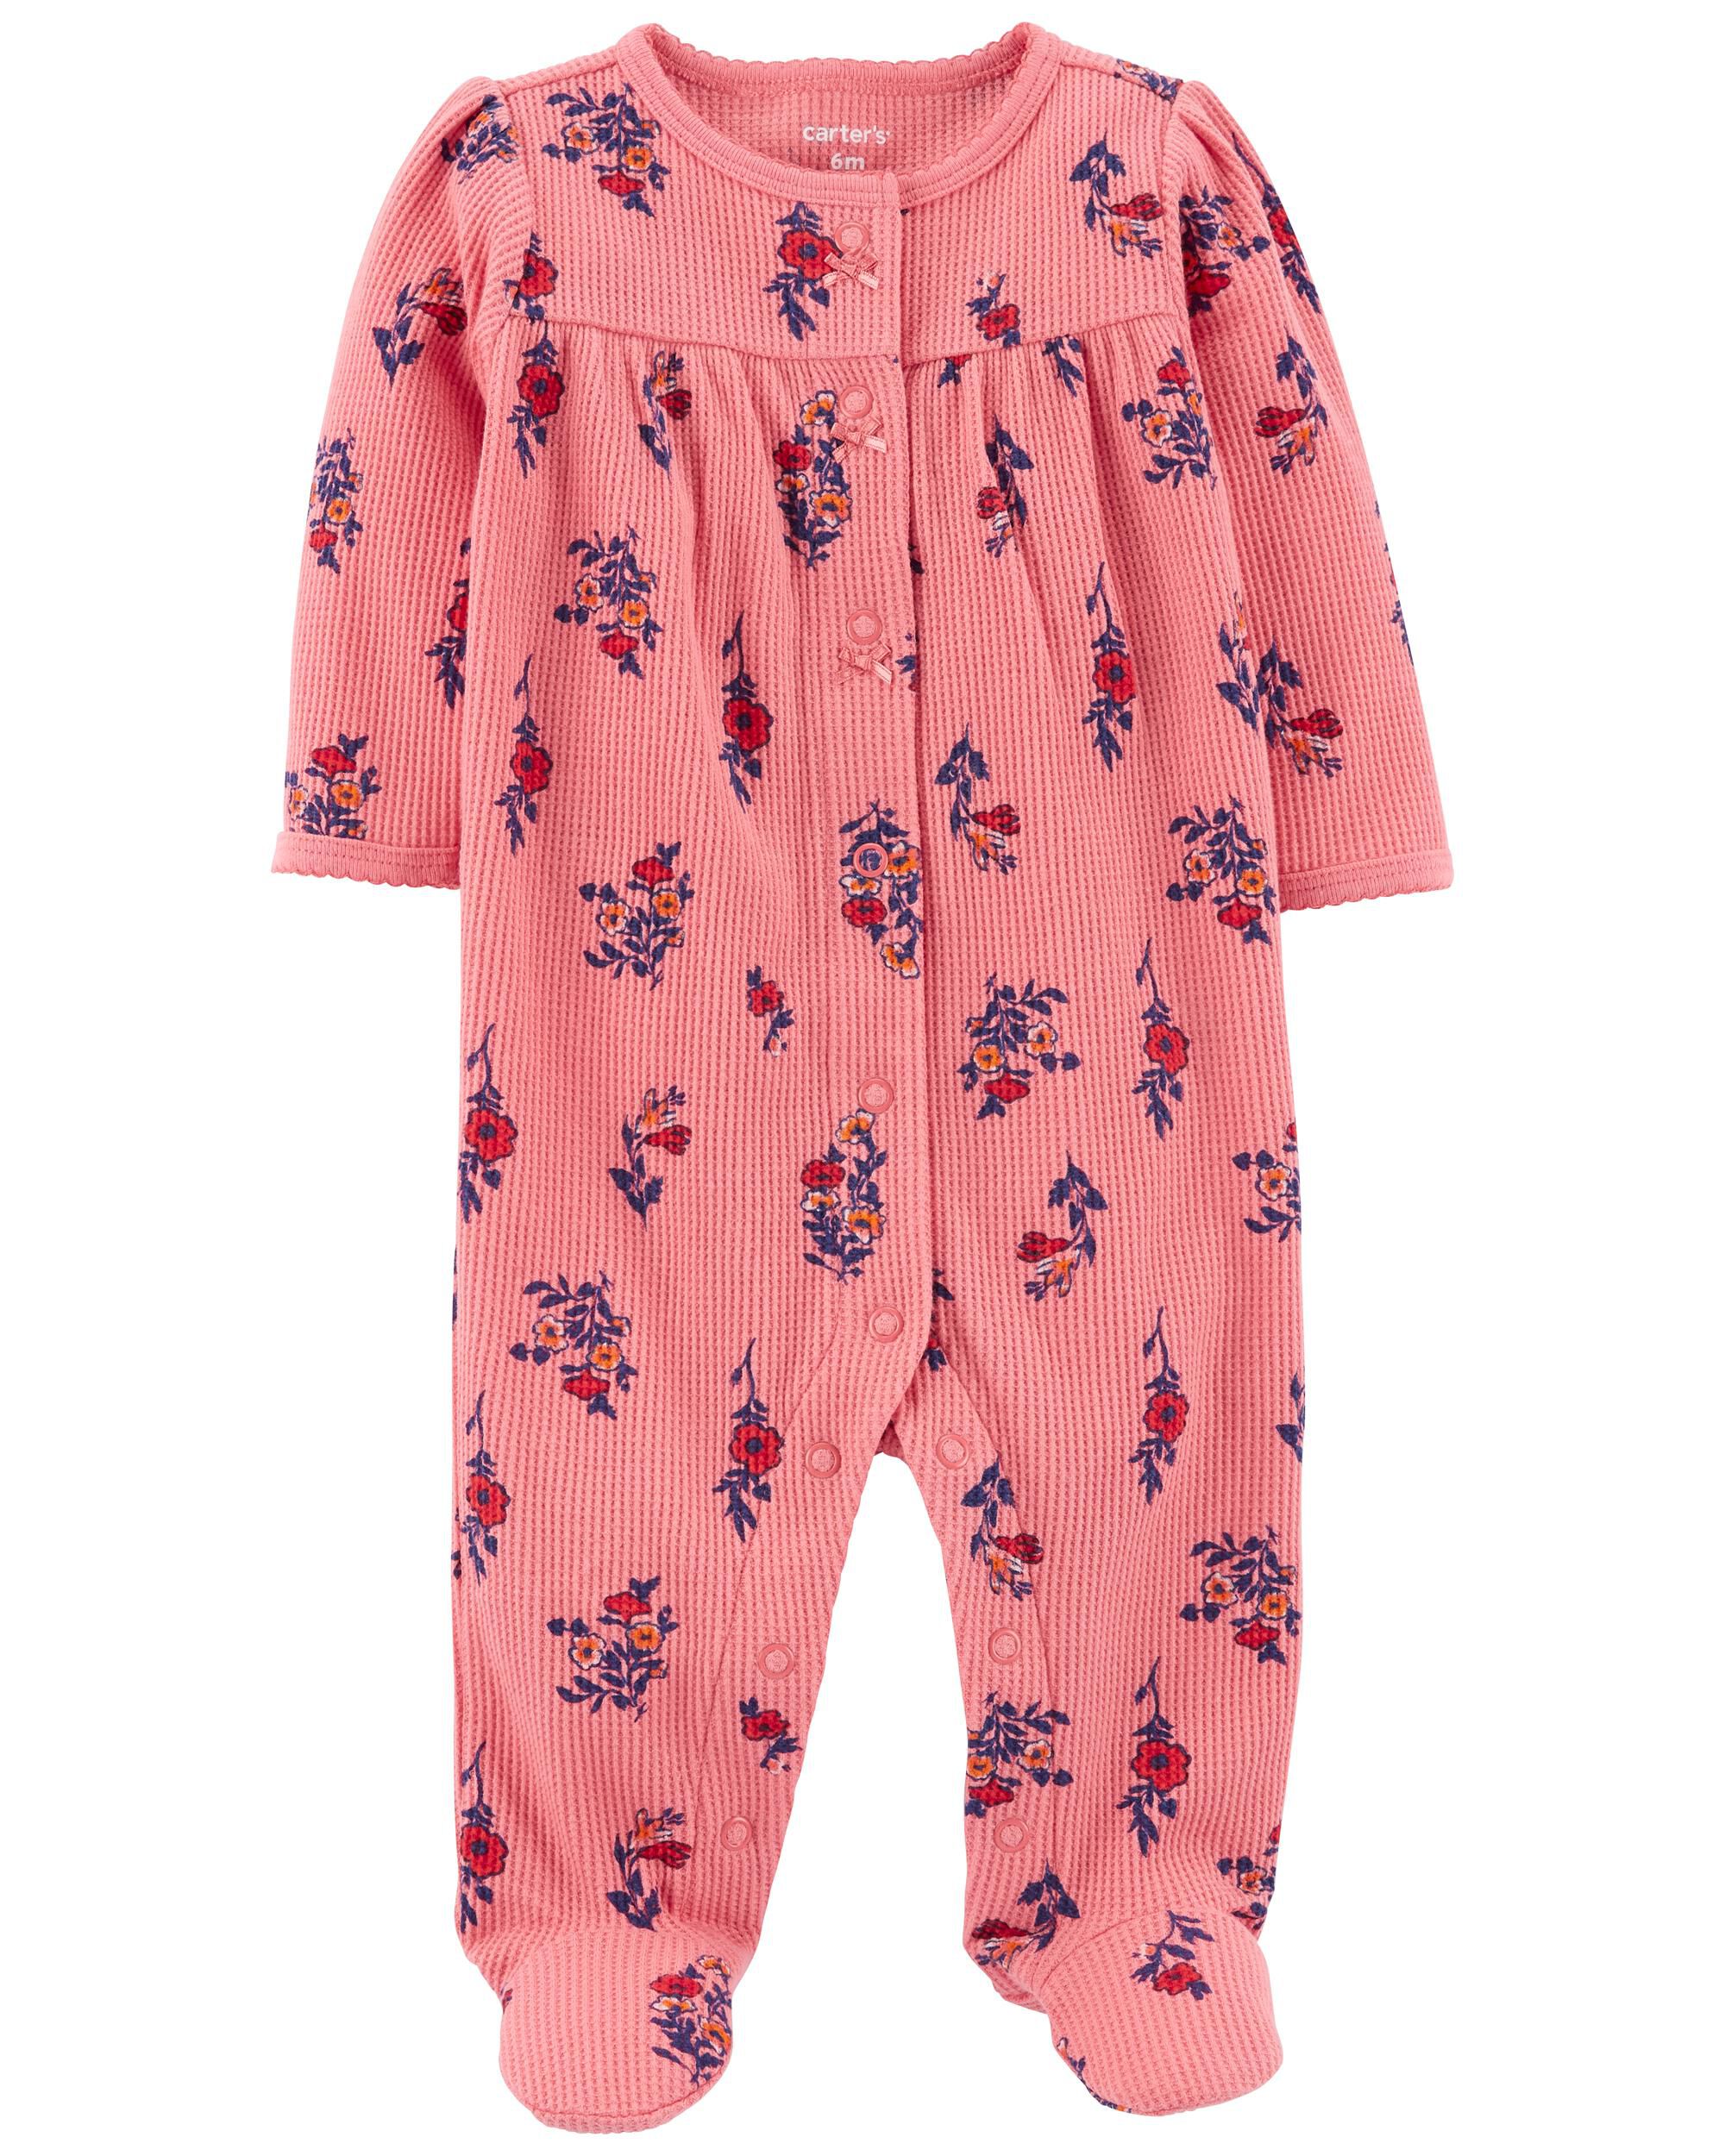 NWT Carter's Girls Fleece Footed Blanket Sleeper Pajamas unicorns floral  u pick 